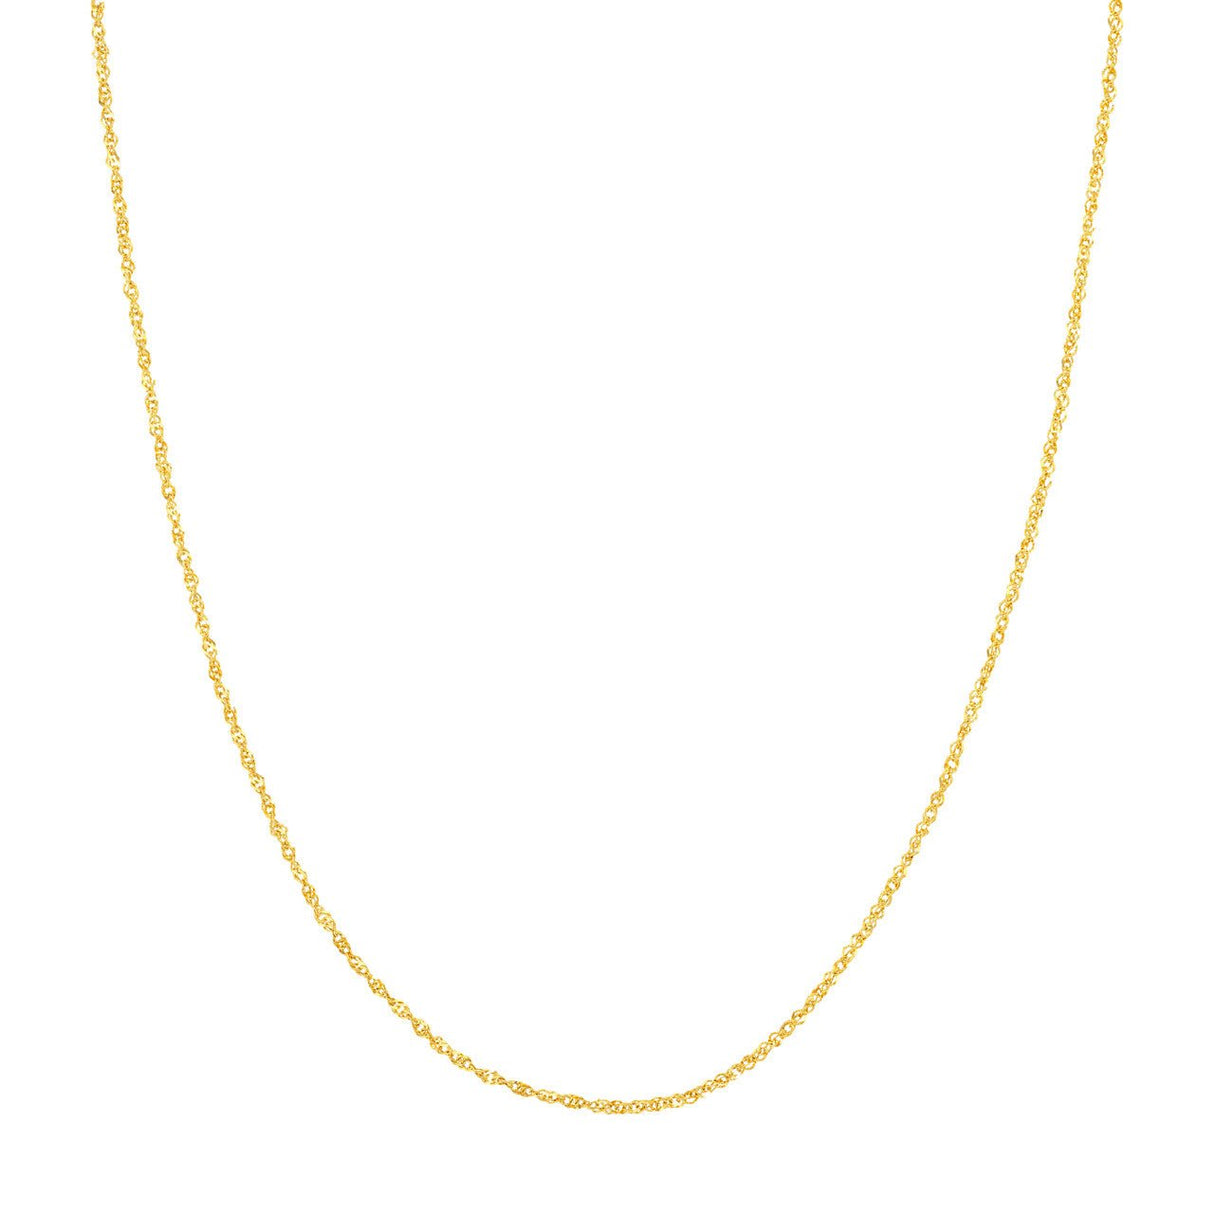 14K Gold Chain, 20", 1.5mm Sparkle Singapore Chain with Lobster Lock, Gold Layered Chain, Gold Layered Necklaces, - Diamond Origin